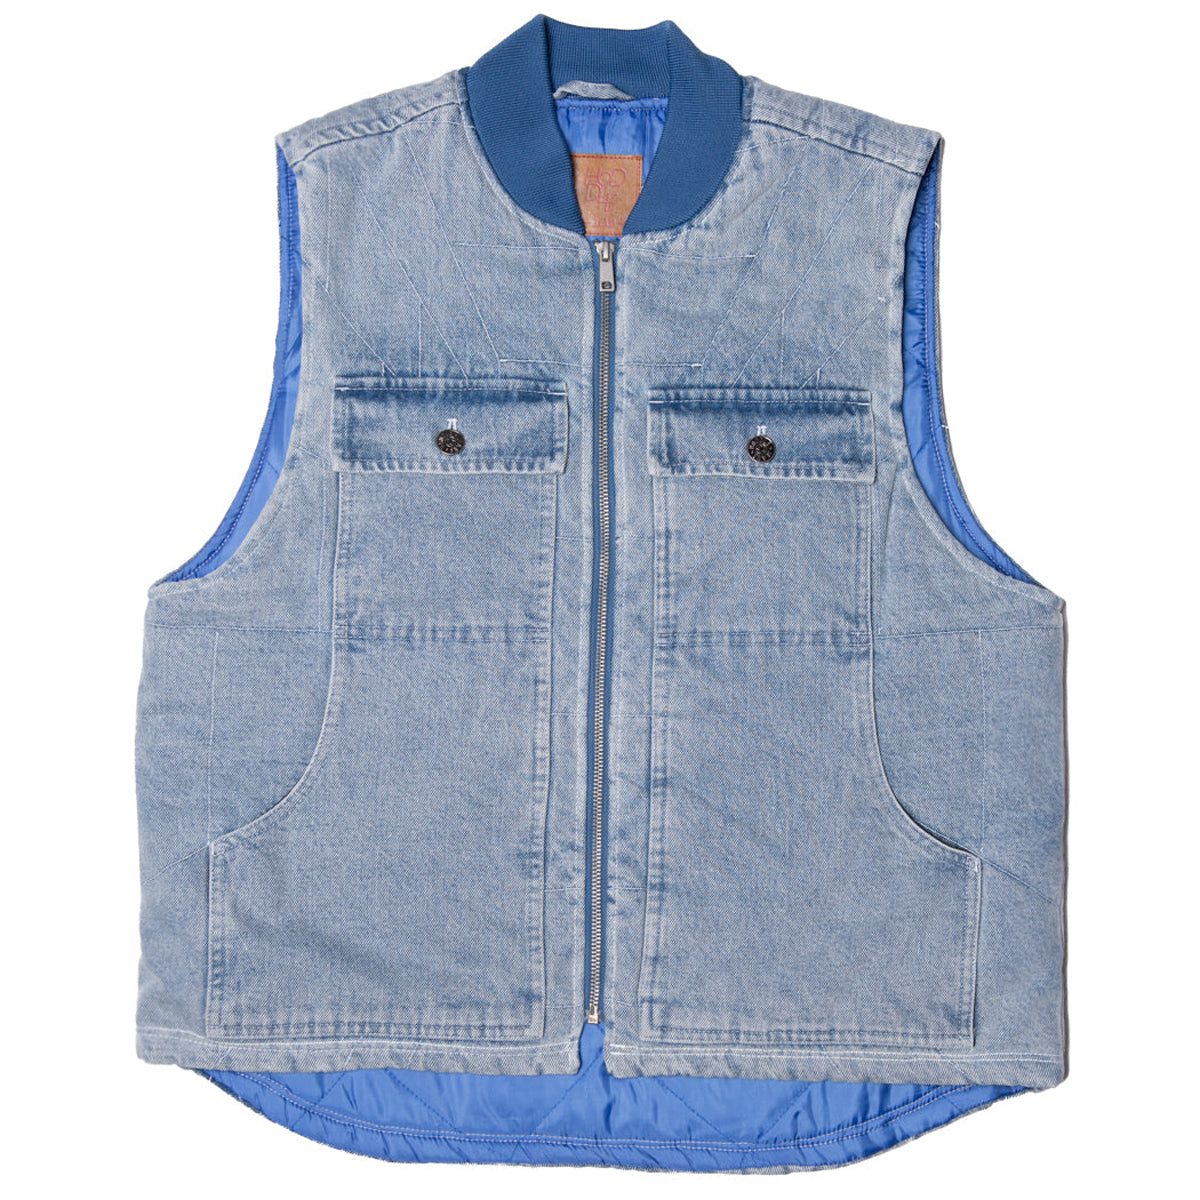 Hoddle Zip Up Carpenter Vest Jacket - Blue Denim Wash image 1